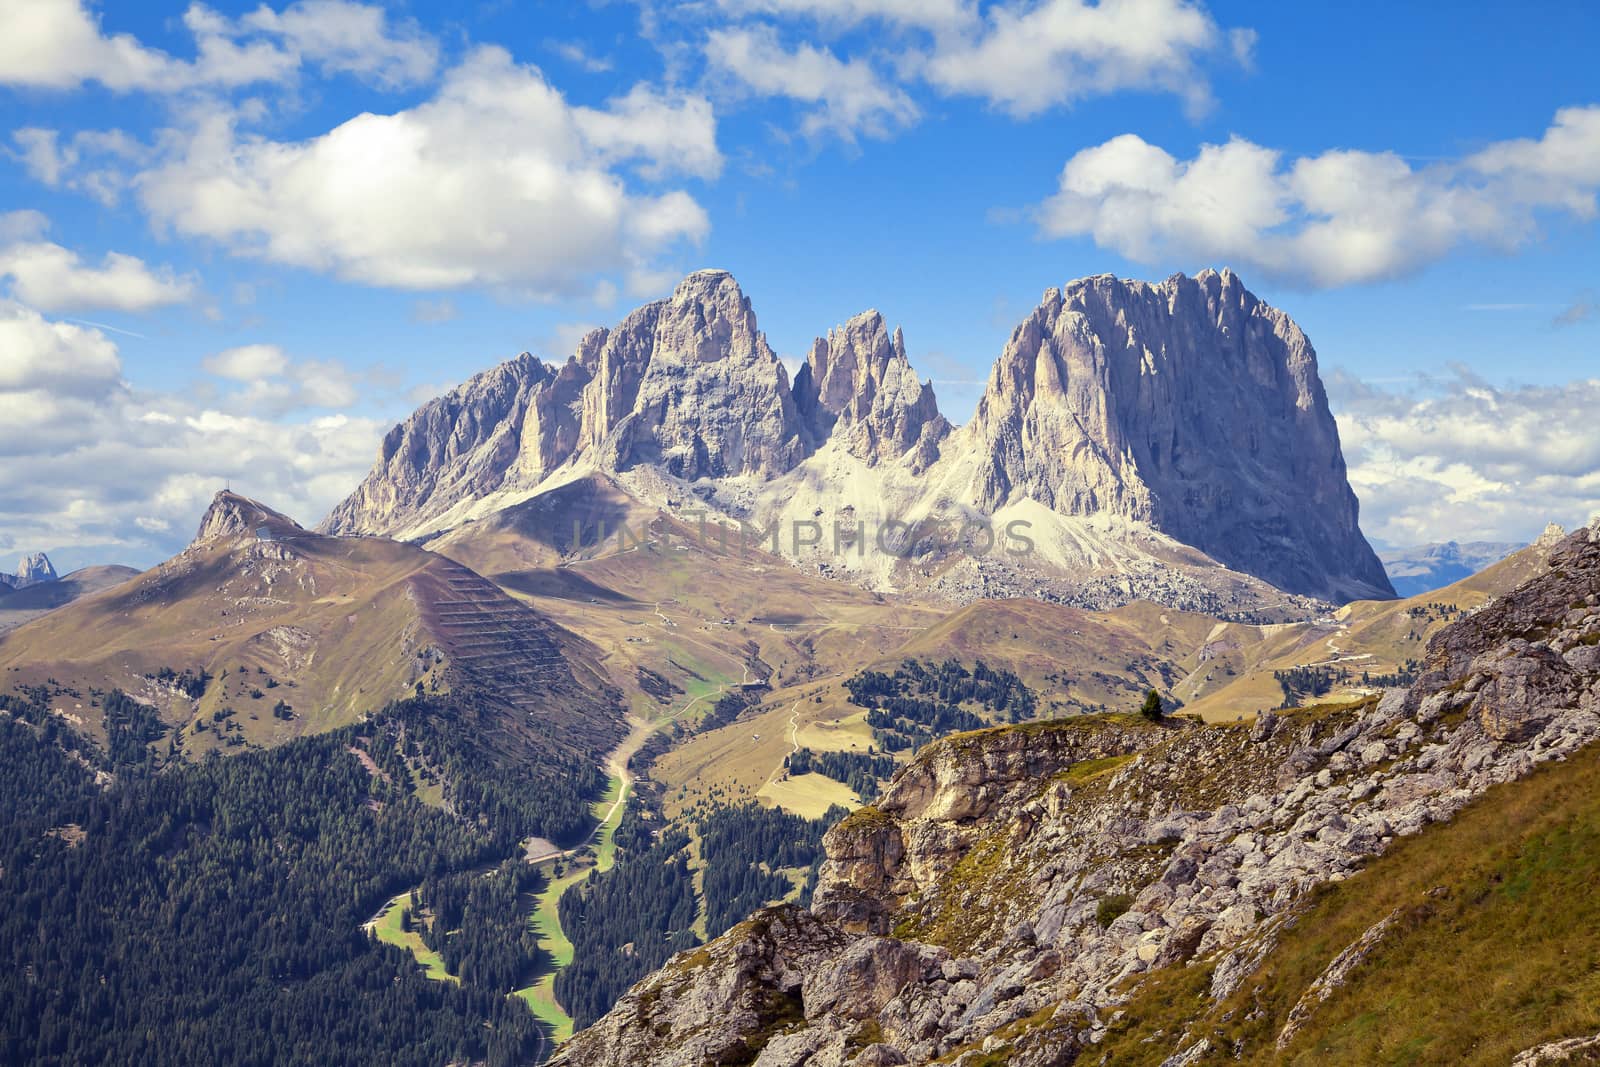 Dolomites mountains landscape on a sunny autumn day